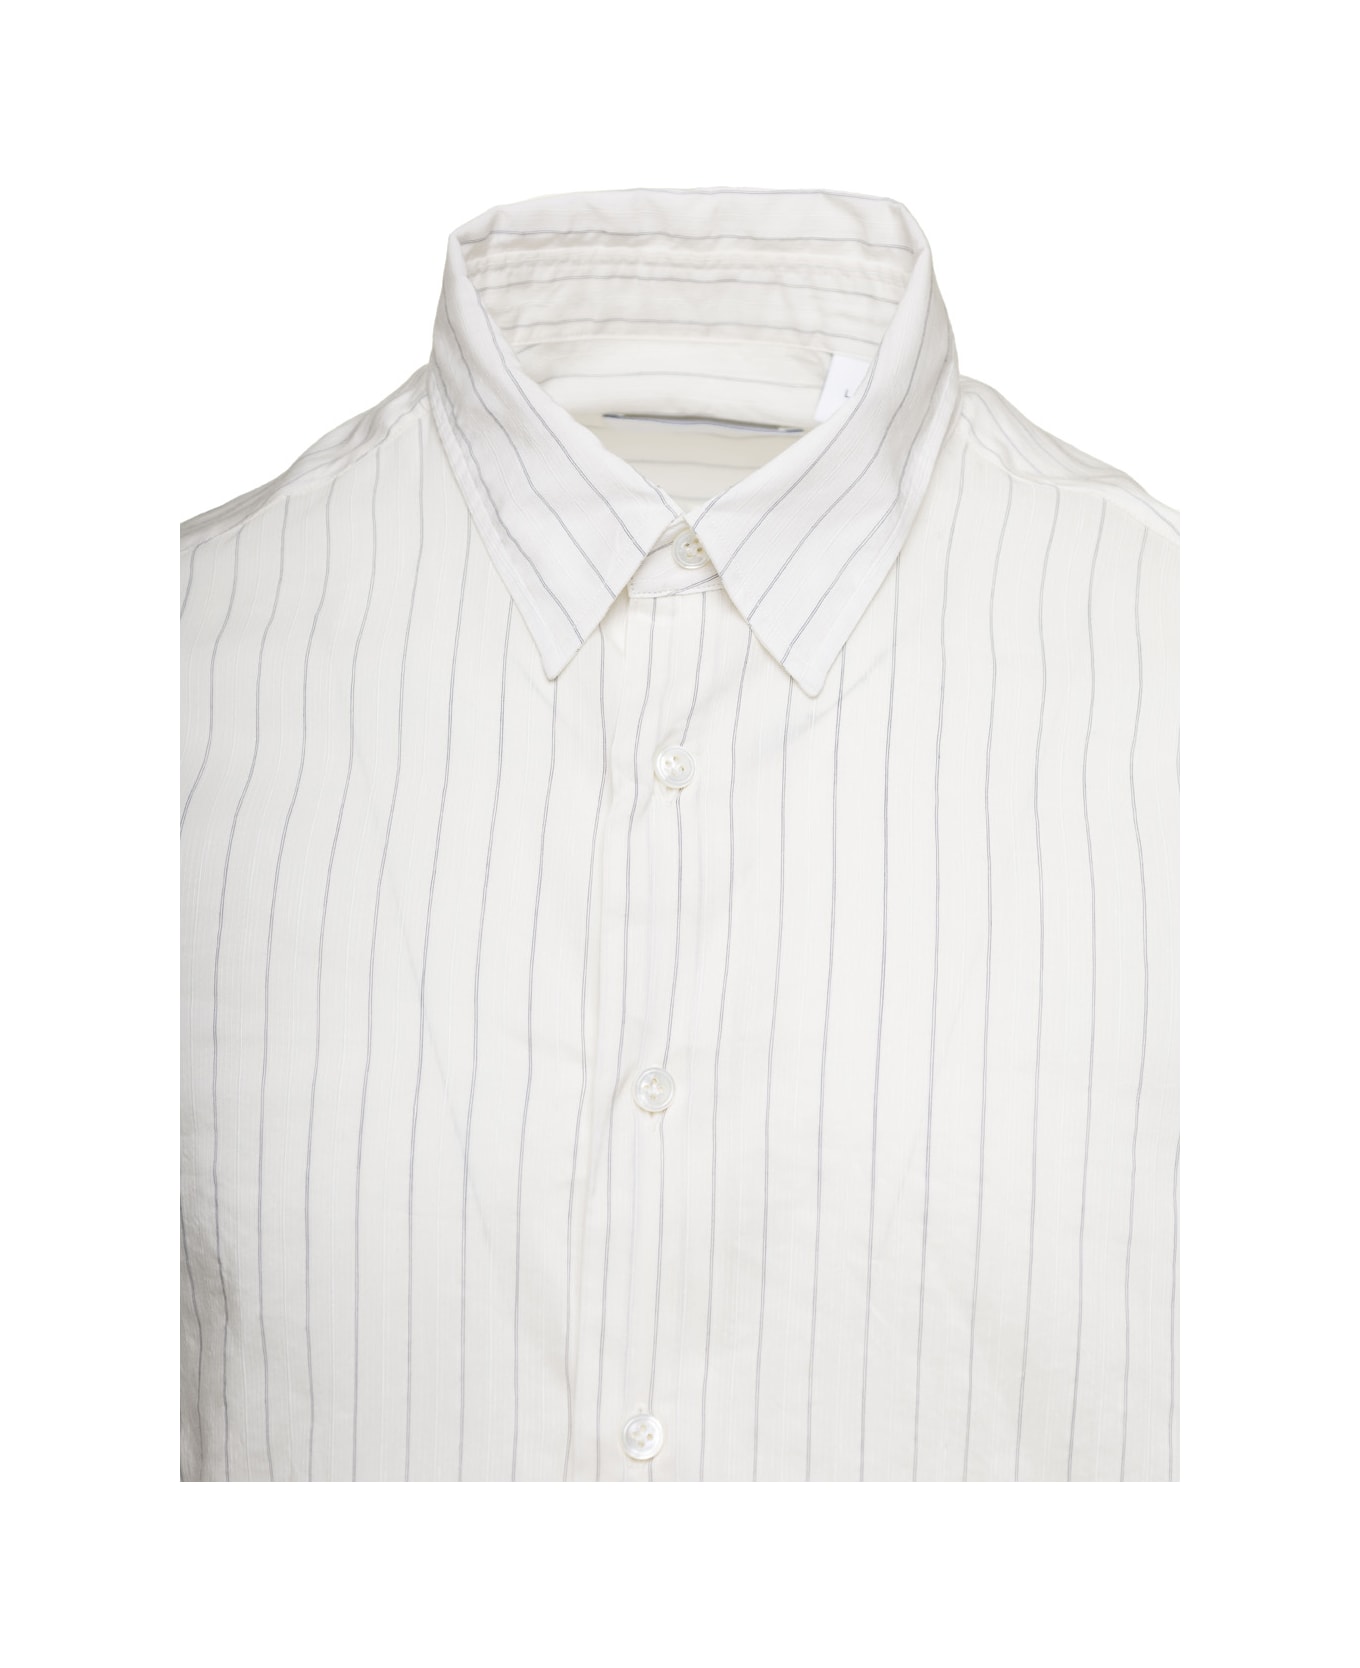 Lardini White Classic Shirt In Cotton Blend Man - White